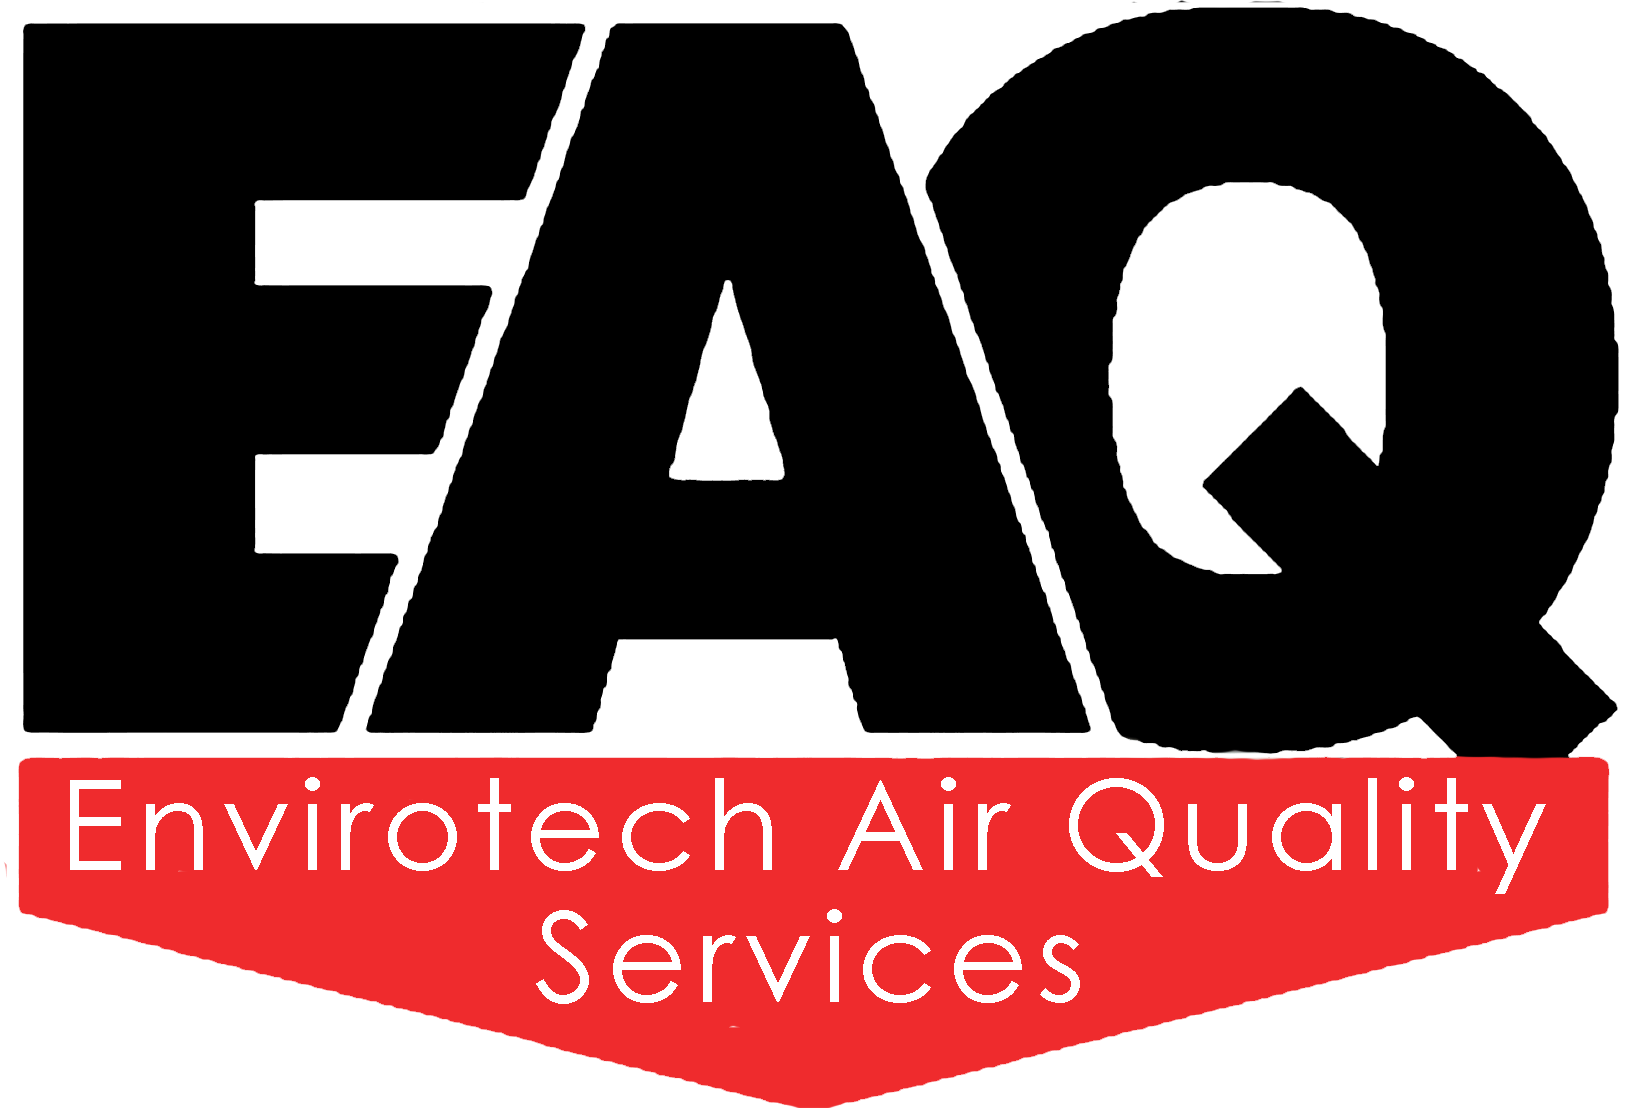 envirotech air quality services logo